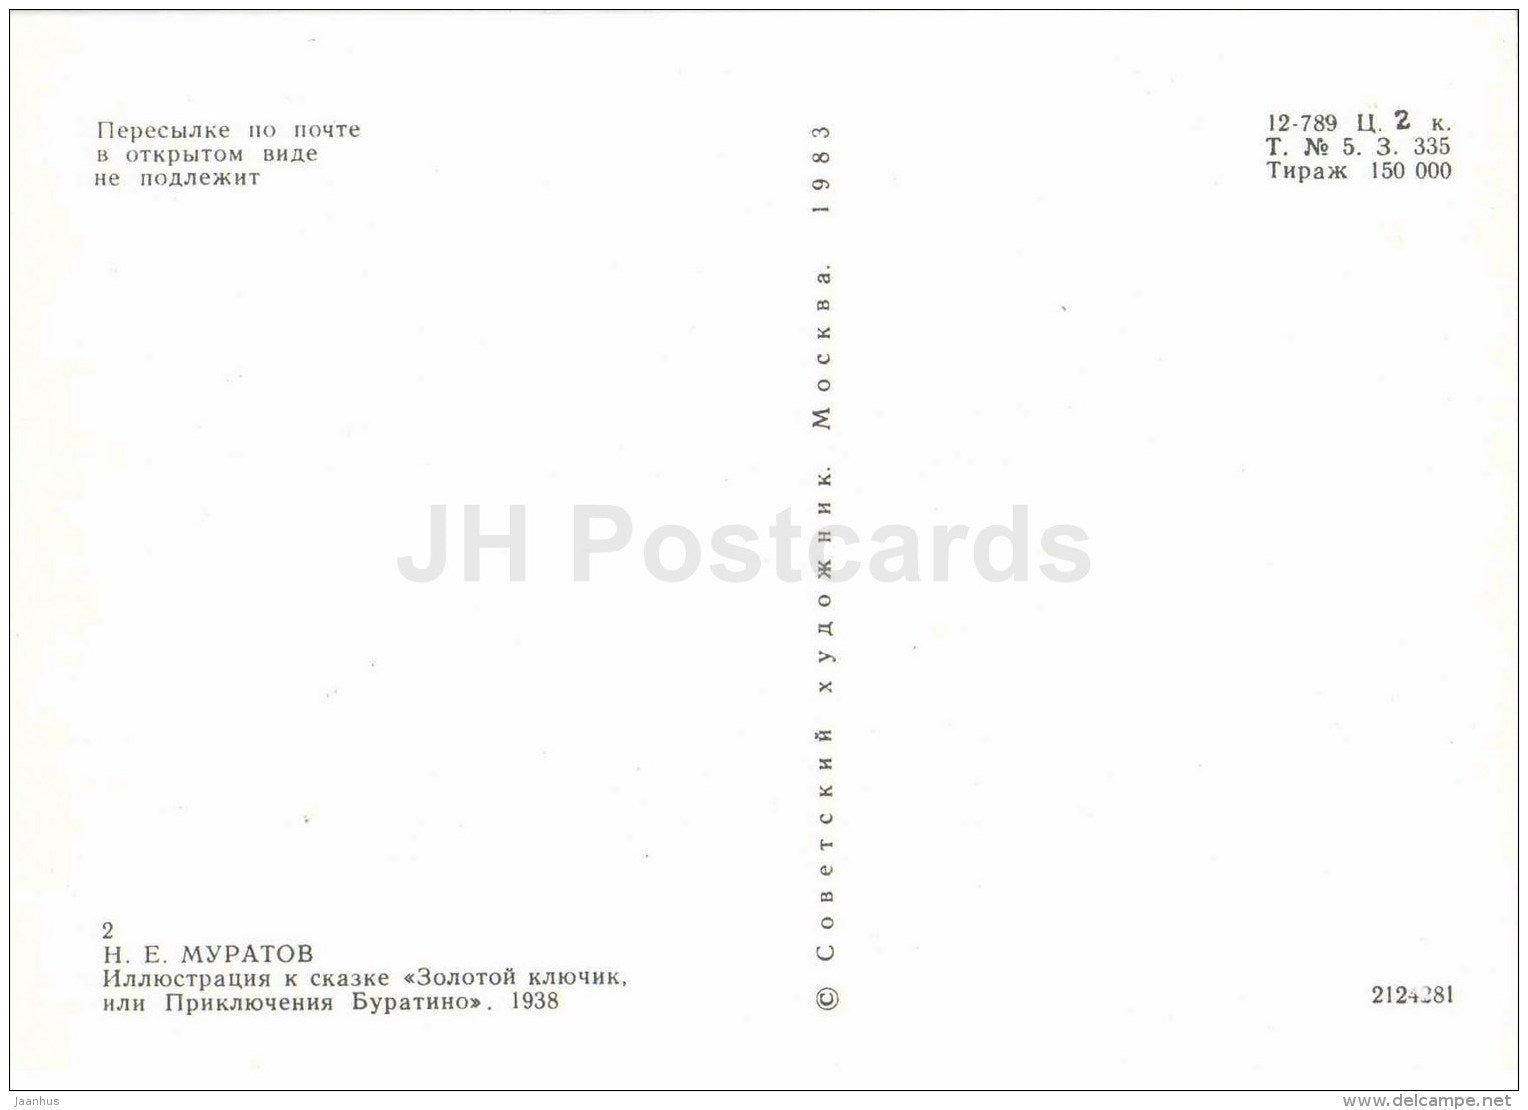 Papa Carlo - Golden Key - Pinocchio and Buratino - 1983 - Russia USSR - unused - JH Postcards